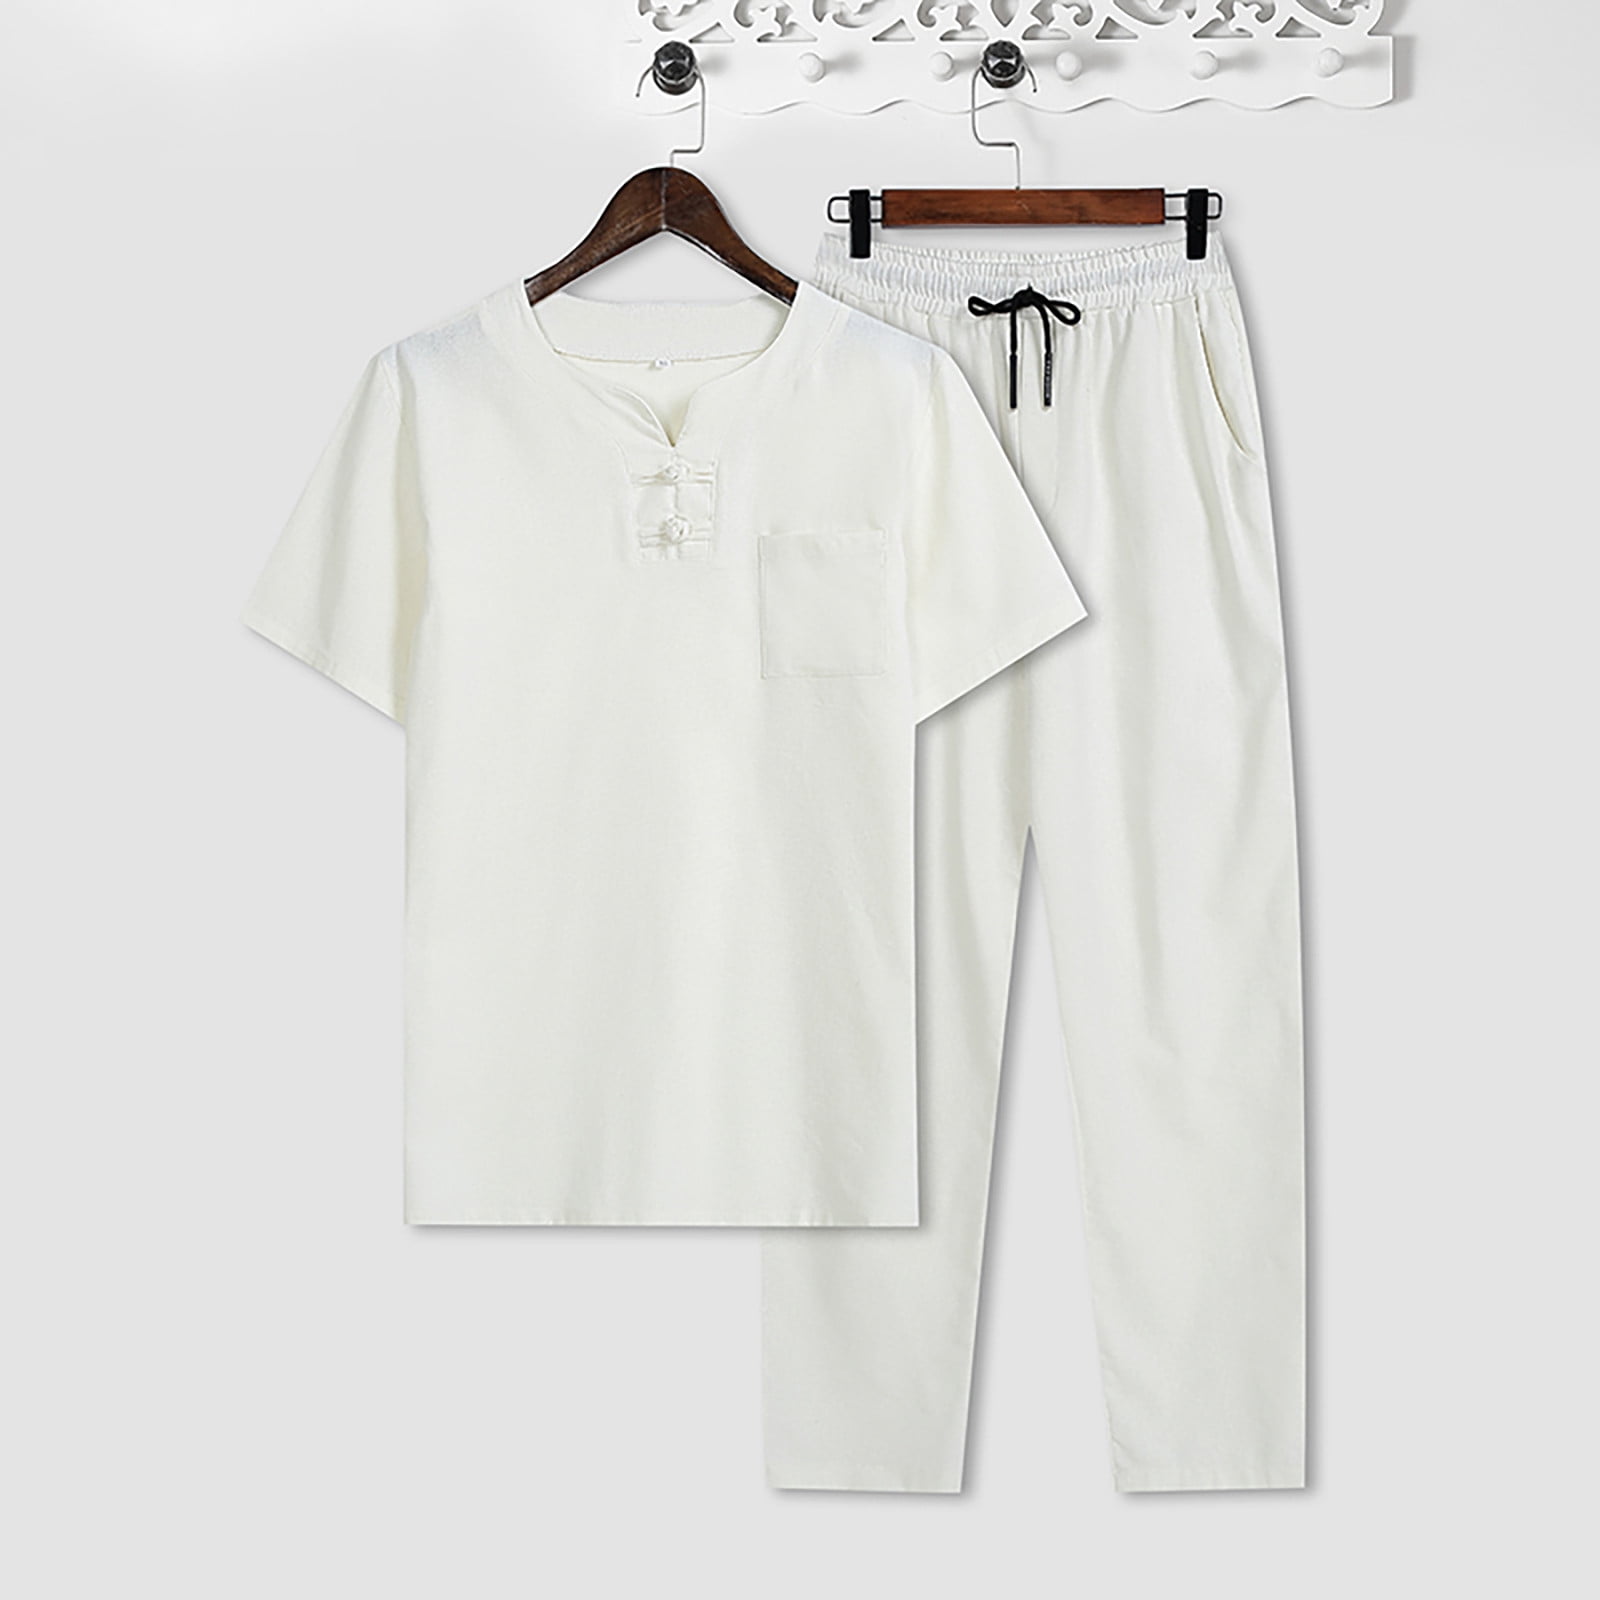 ZXHACSJ Men's Retro Cotton Linen Short-sleeved T-shirt Top Loose pants ...